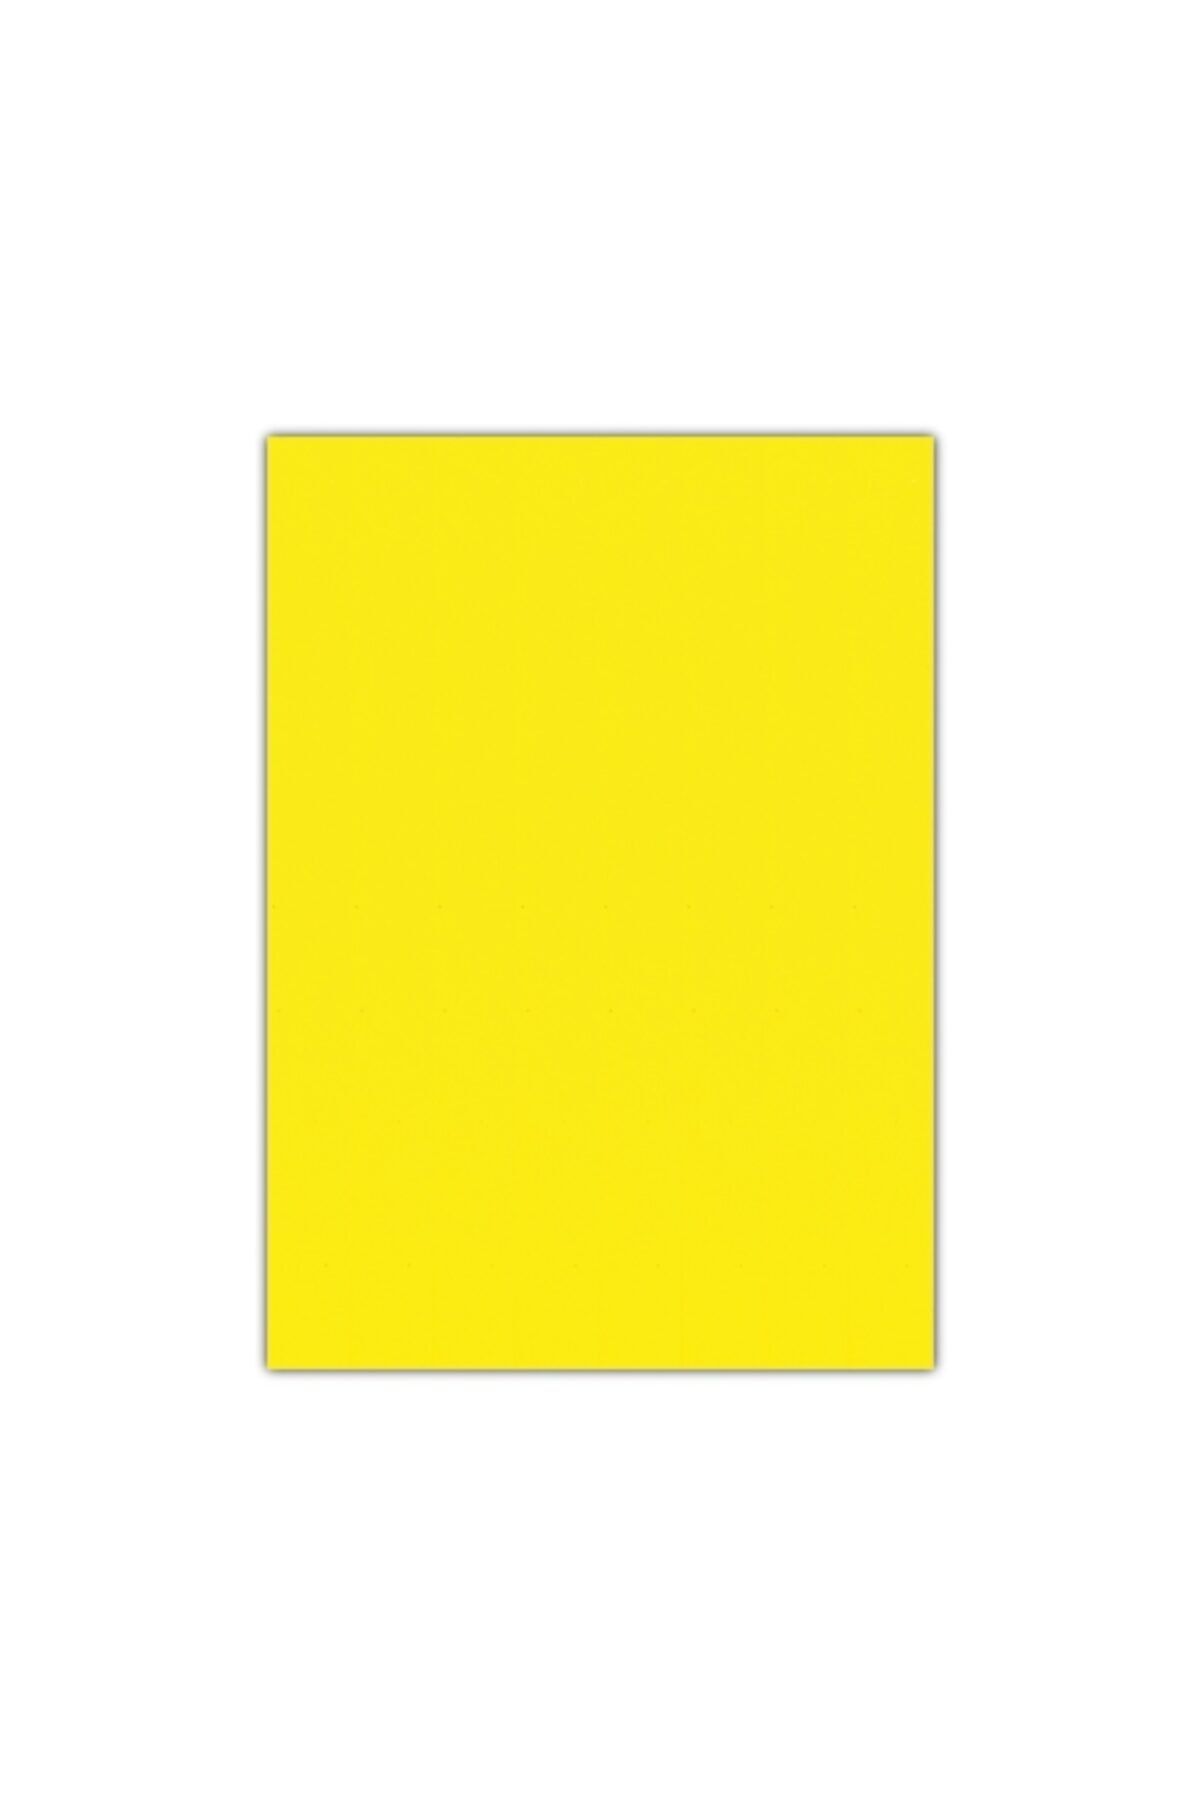 EVA Sarı Renk Sünger 700x150c m 1.5 mm